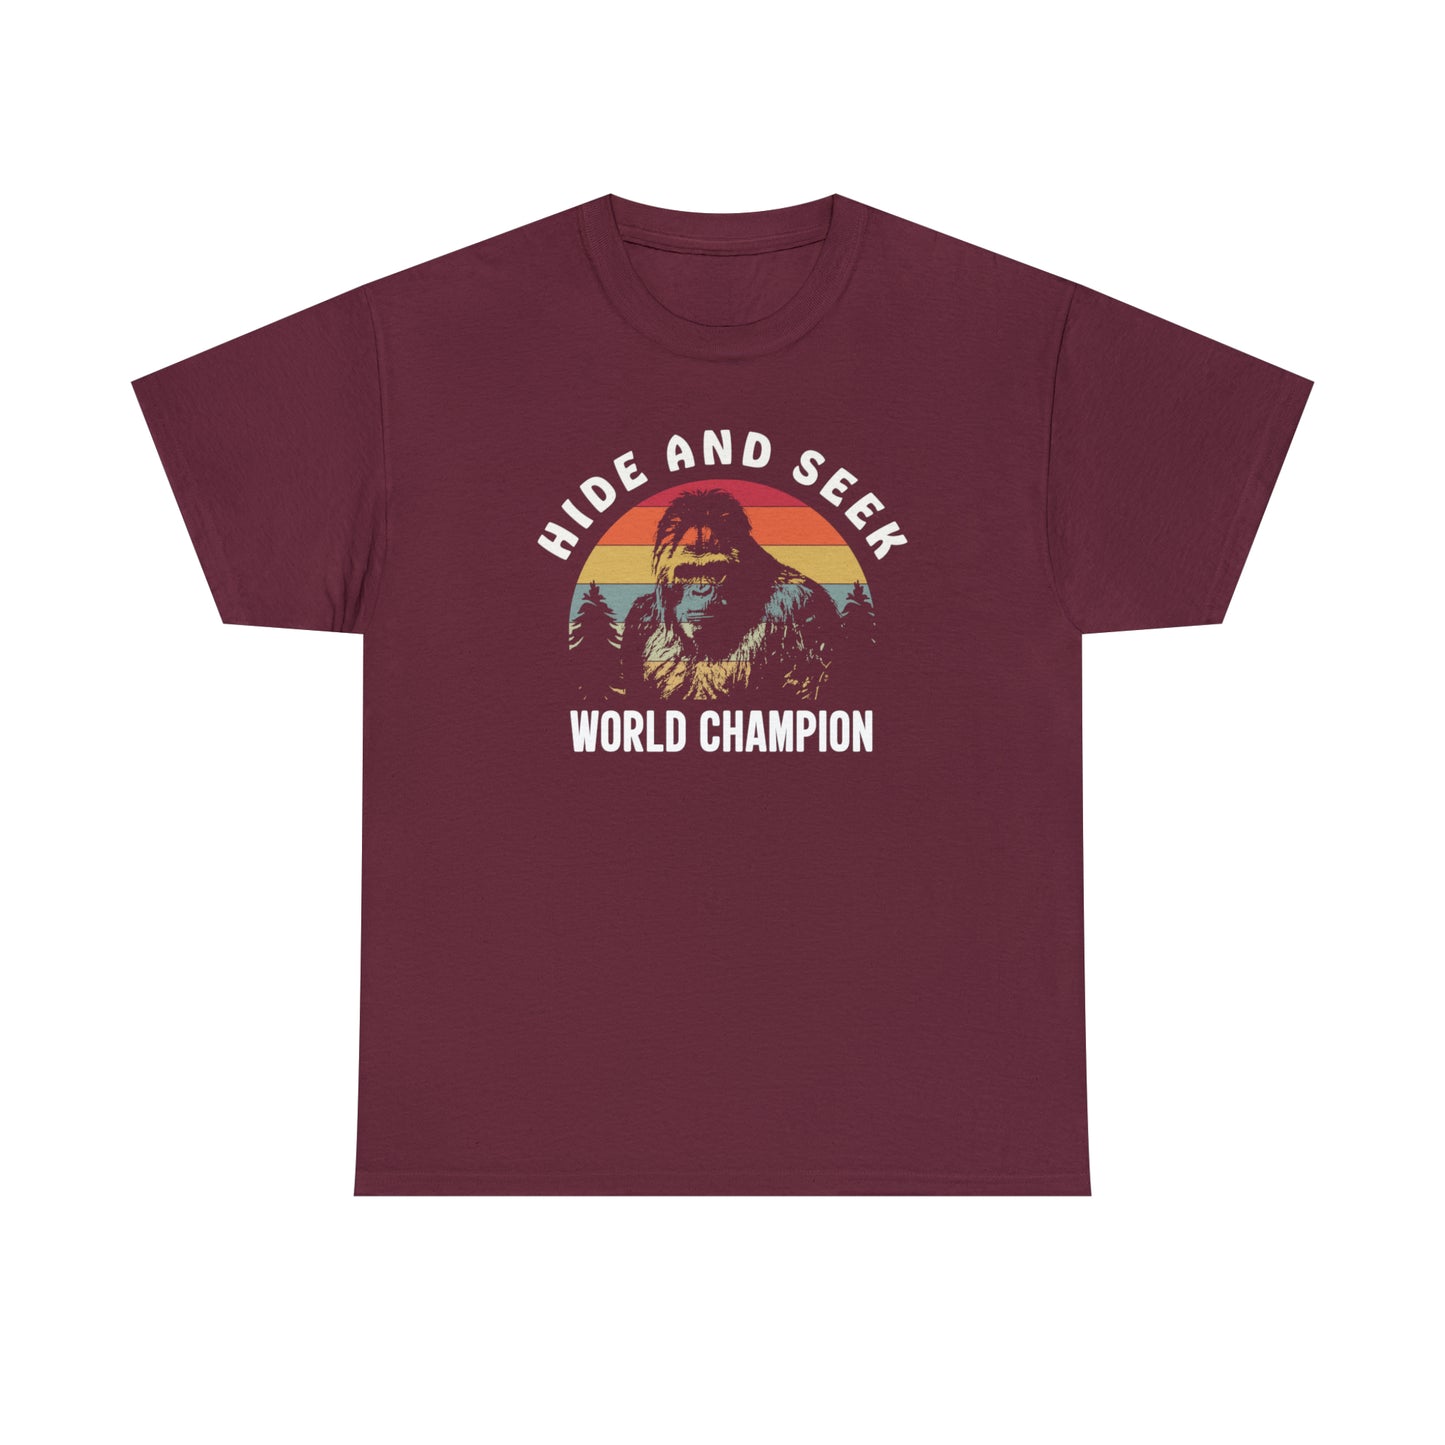 Yeti T-Shirt For Hide And Seek T Shirt For Bigfoot TShirt For World Champion TShirt For Sasquach Shirt For Bigfoot Conspiracy Fan